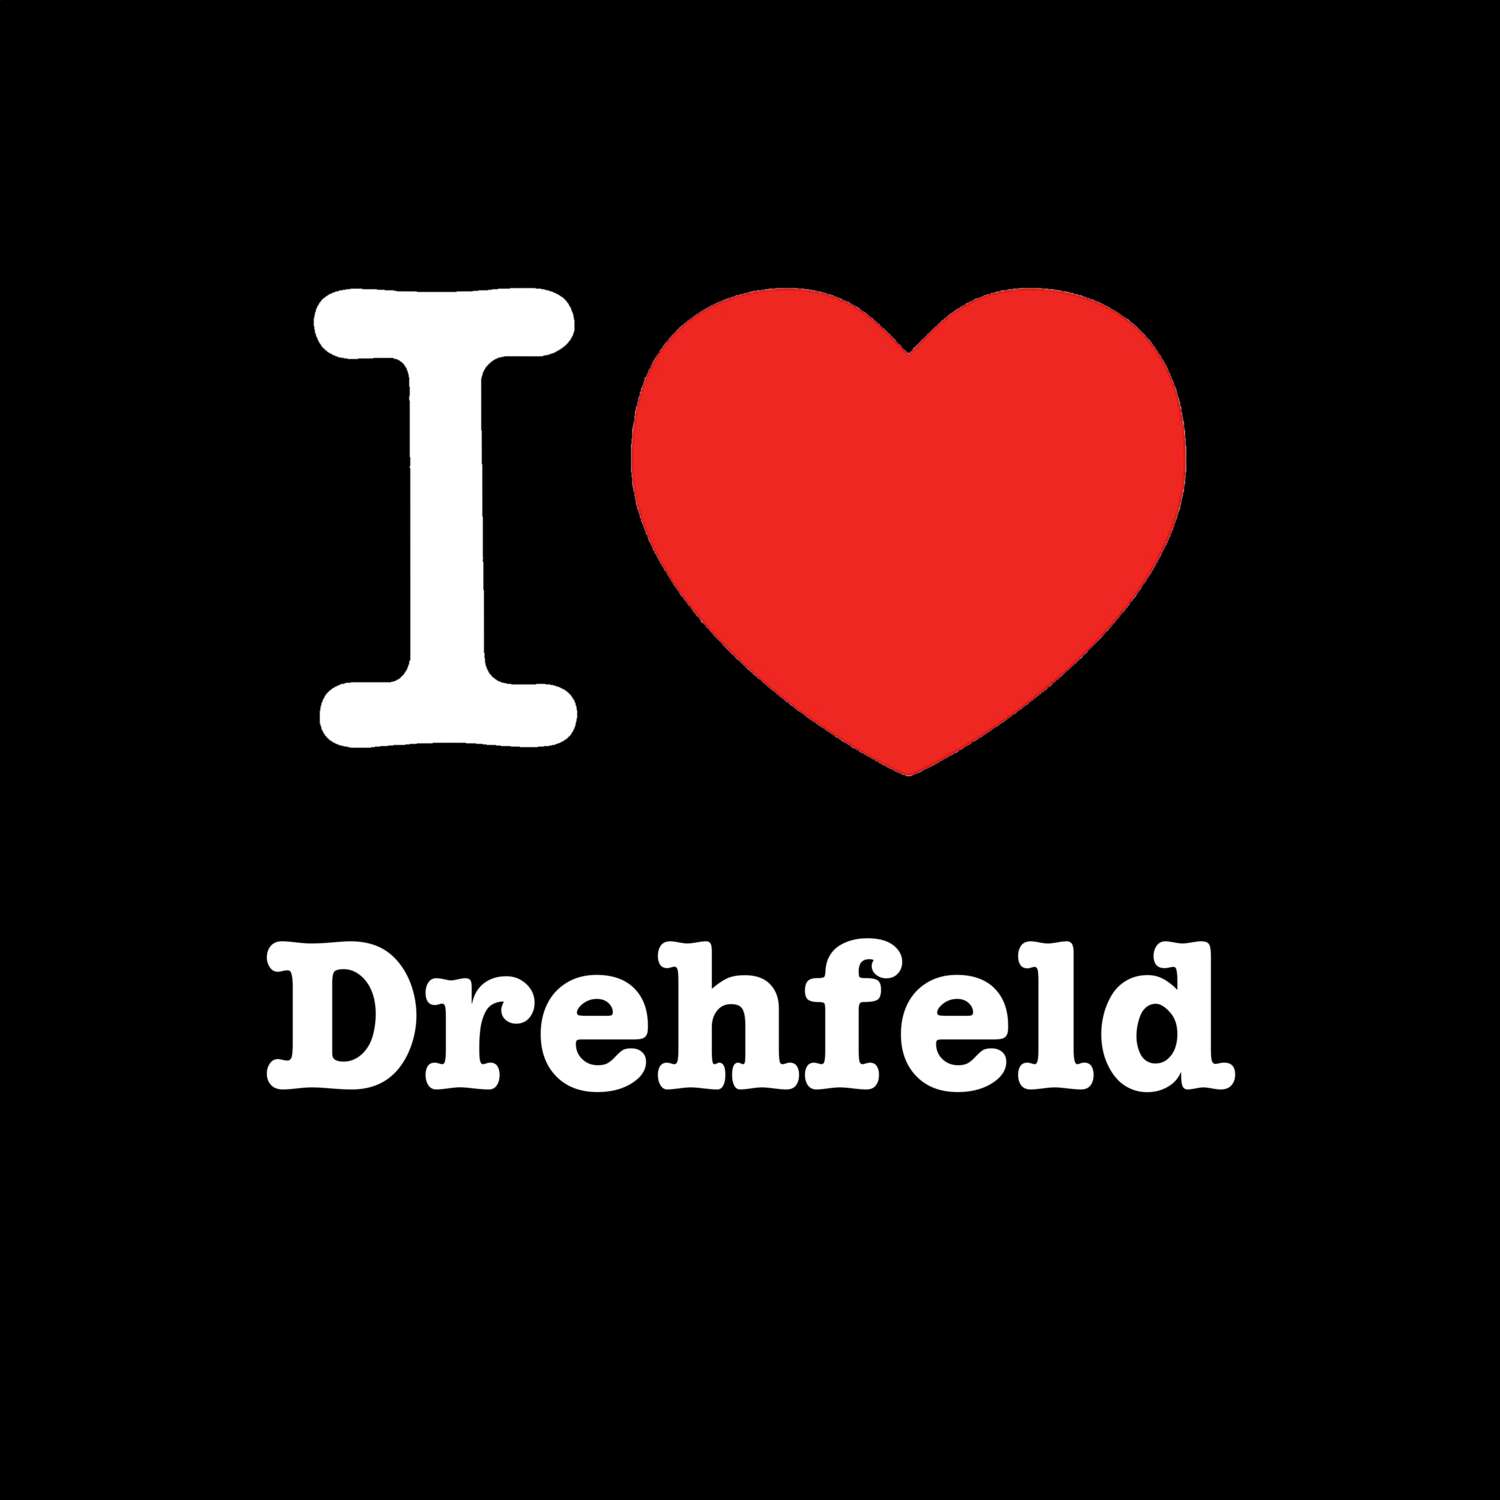 Drehfeld T-Shirt »I love«